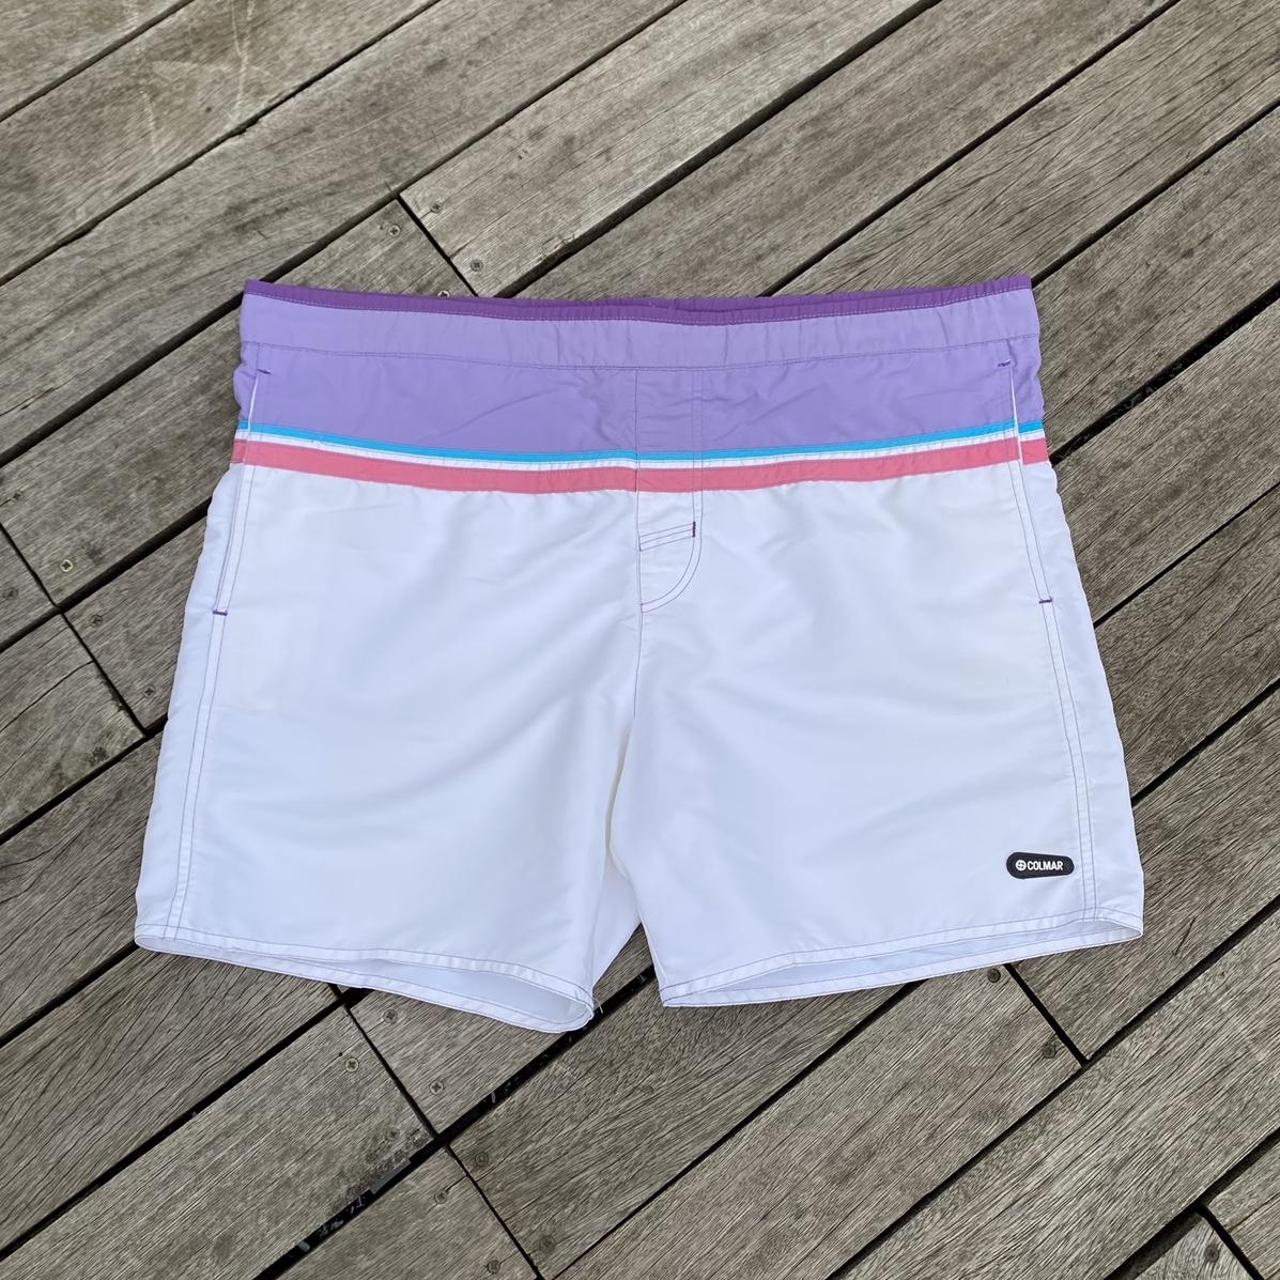 Men's White and Purple Shorts | Depop